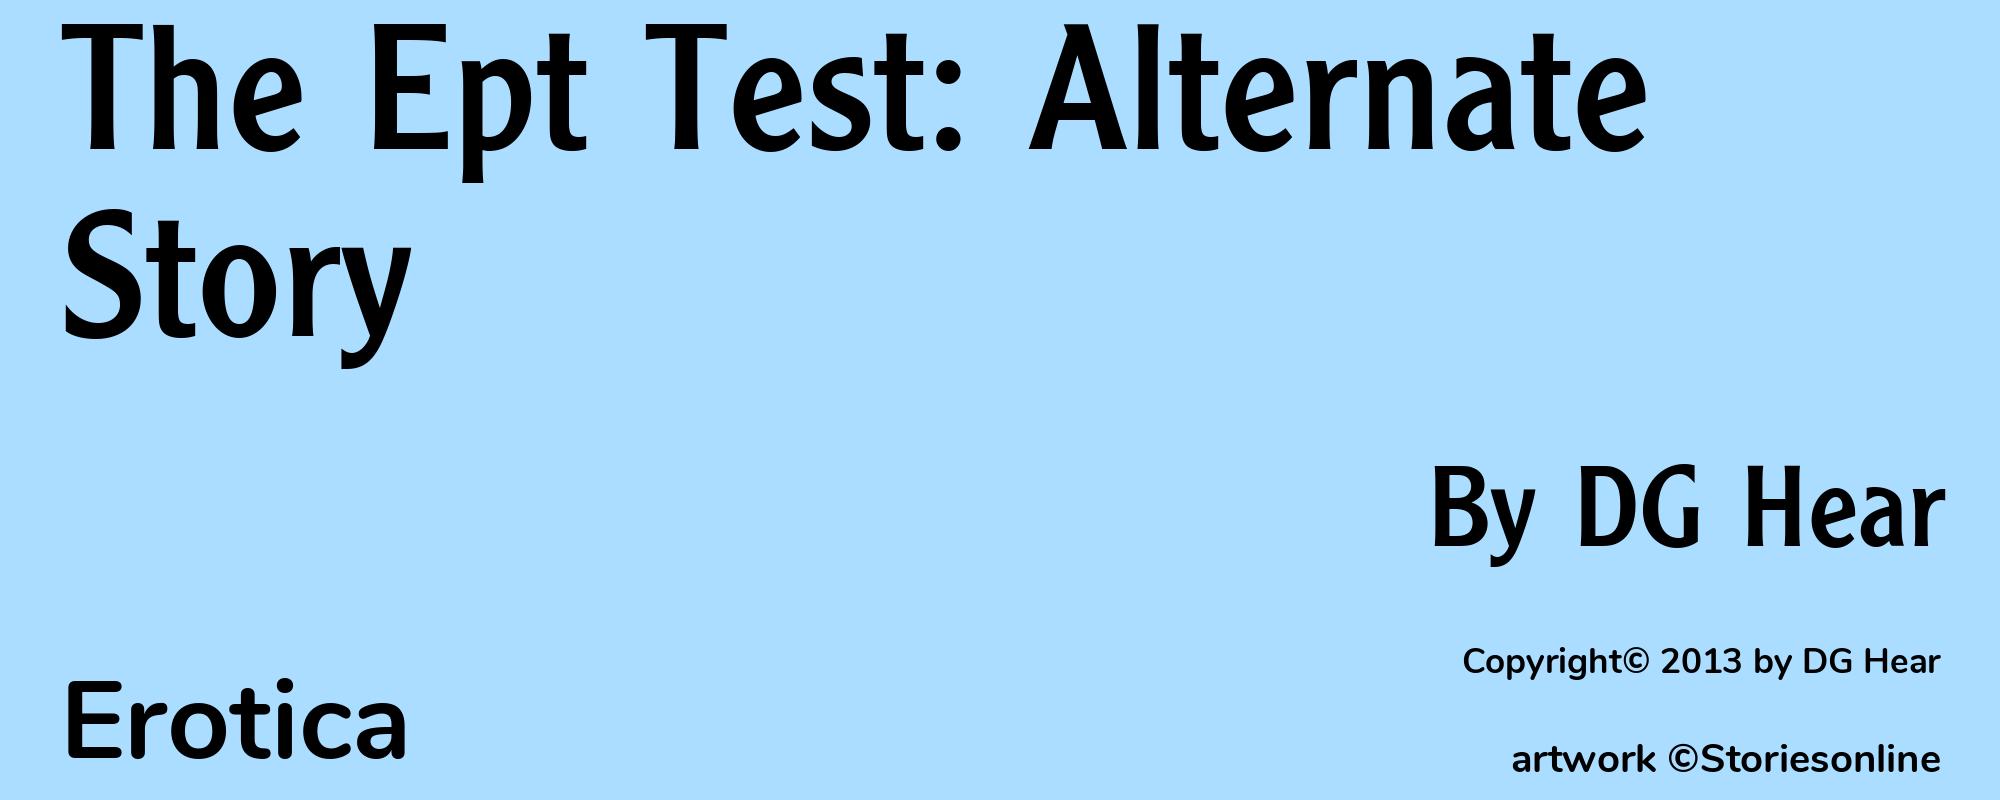 The Ept Test: Alternate Story - Cover